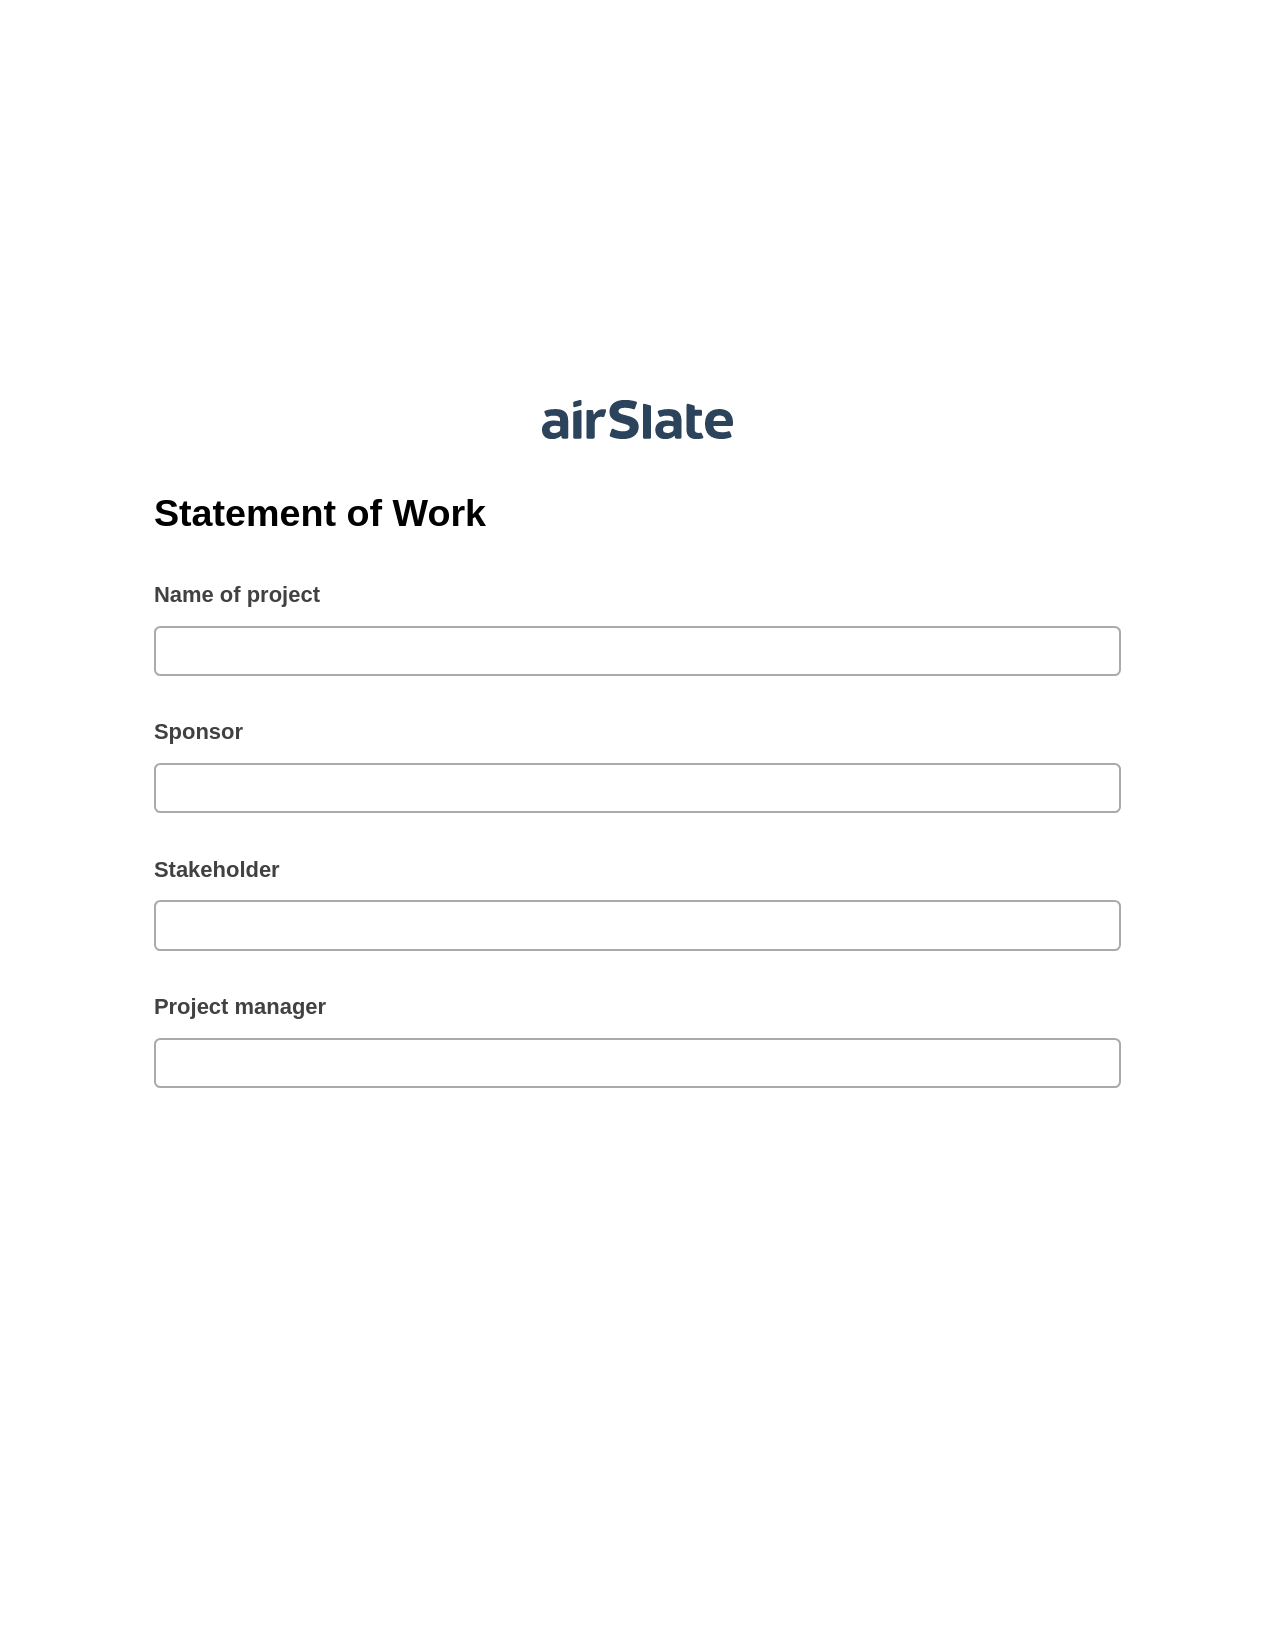 Multirole Statement of Work Pre-fill Document Bot, Create slate bot, OneDrive Bot